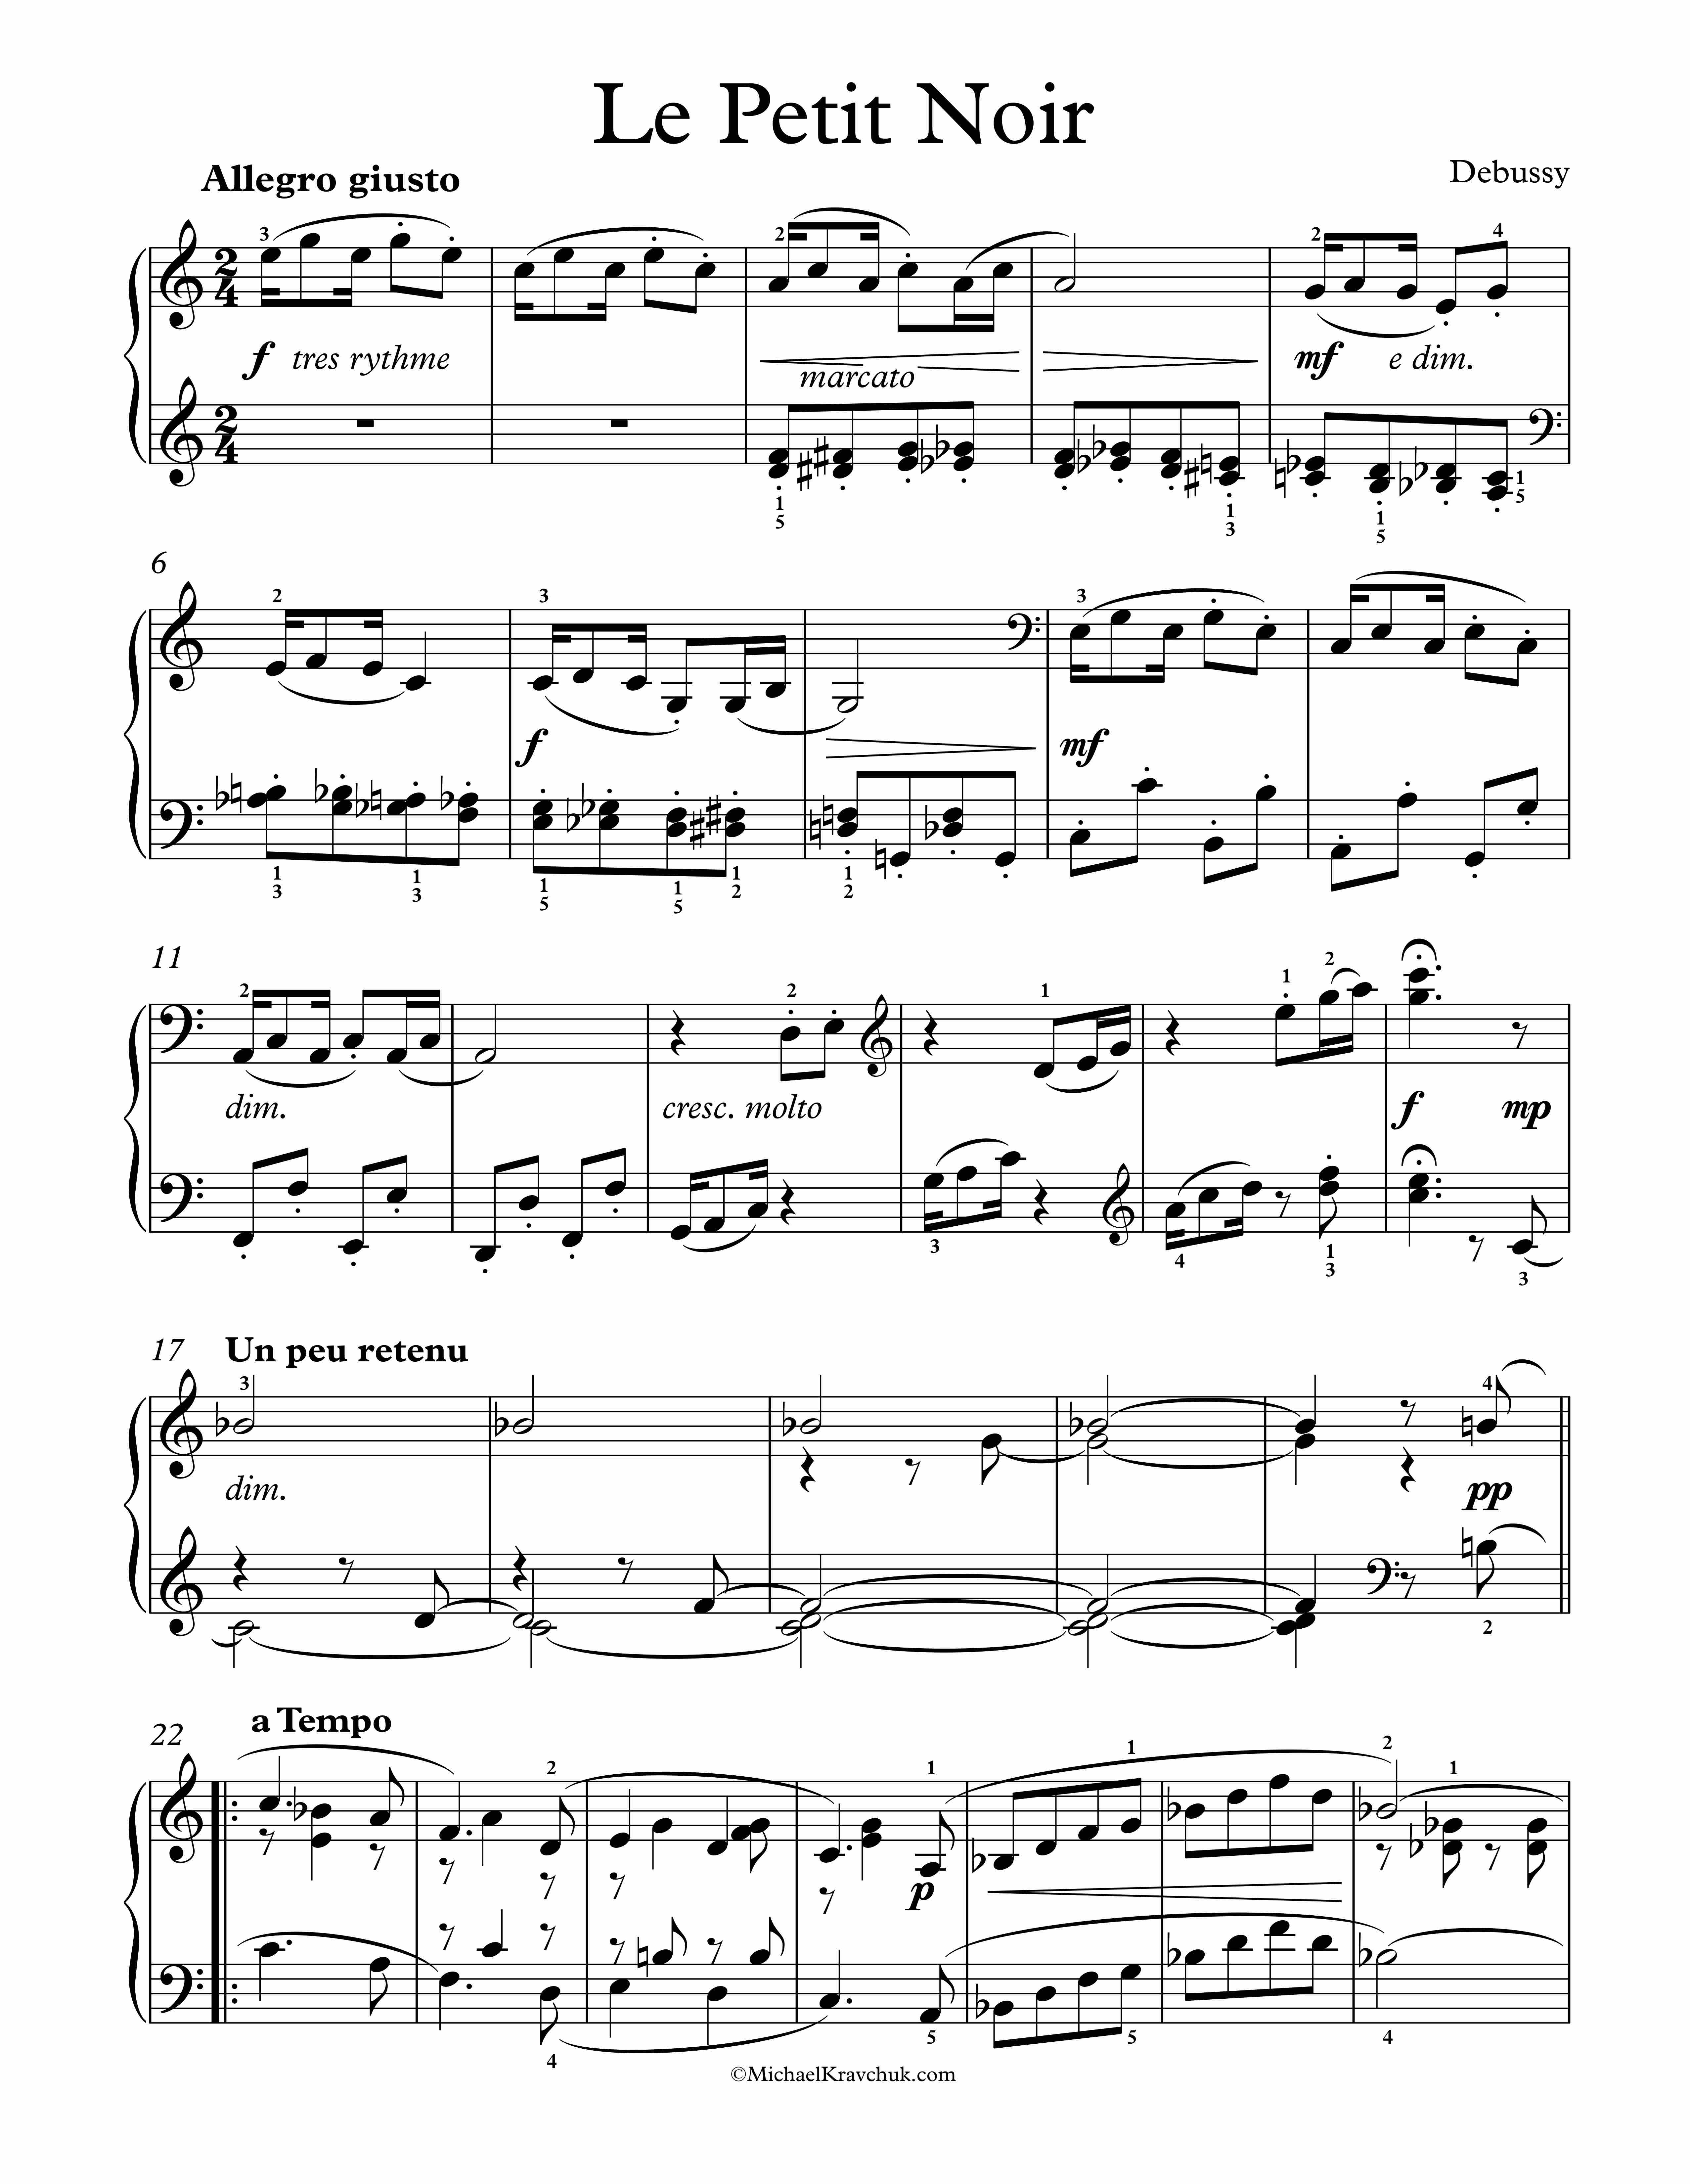 Free Piano Sheet Music - Le Petit Noir - Debussy